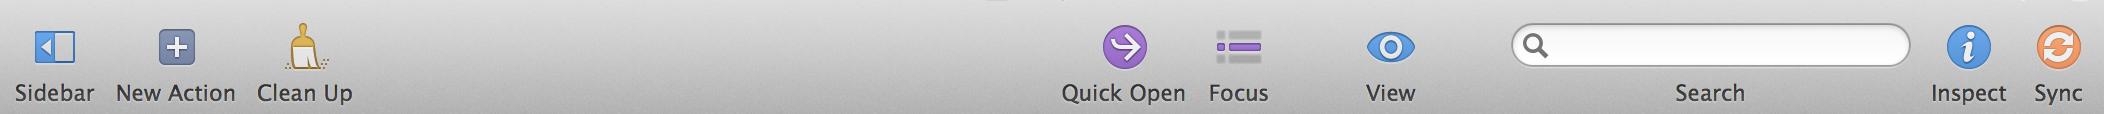 The default toolbar in OmniFocus 2.